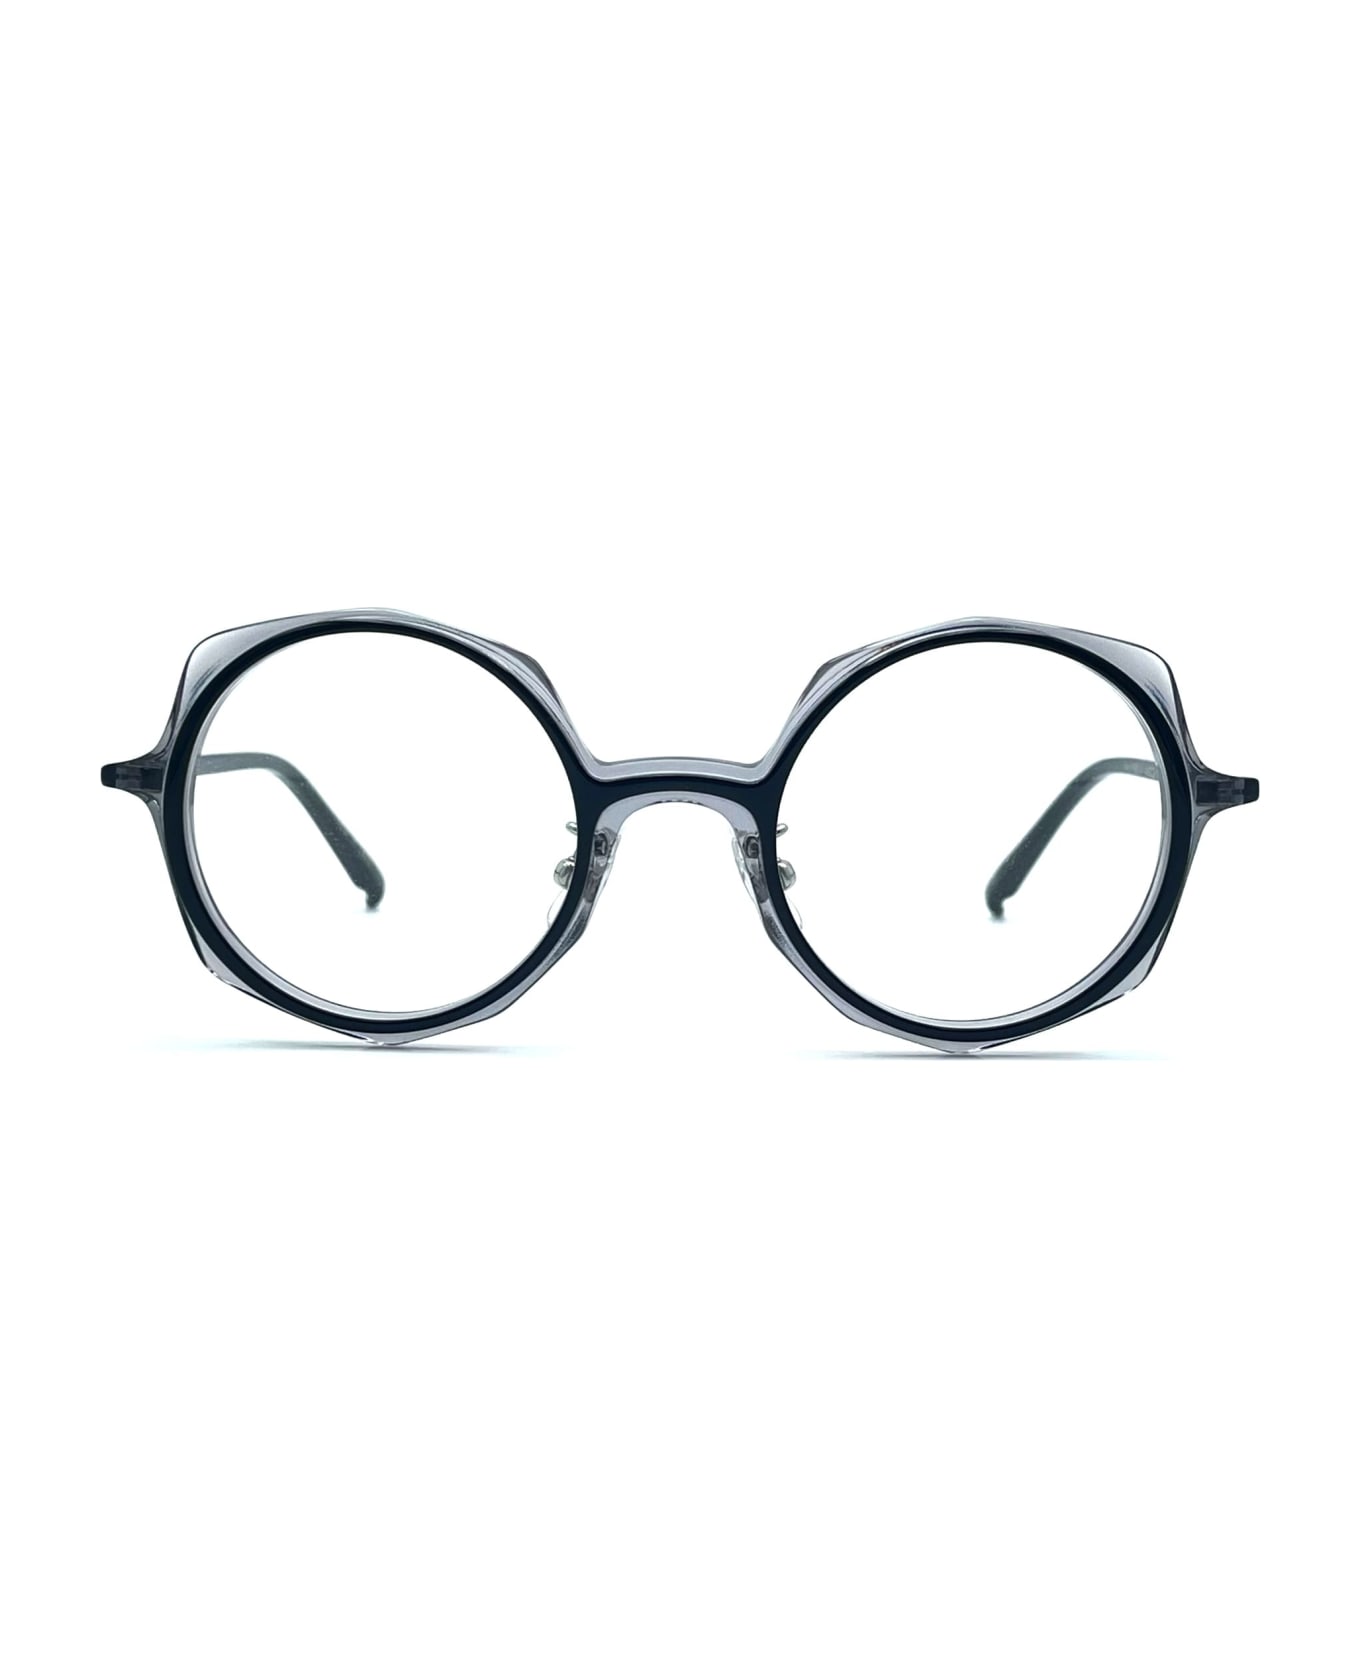 FACTORY900 Fa 1152-39 Glasses - Black/Grey